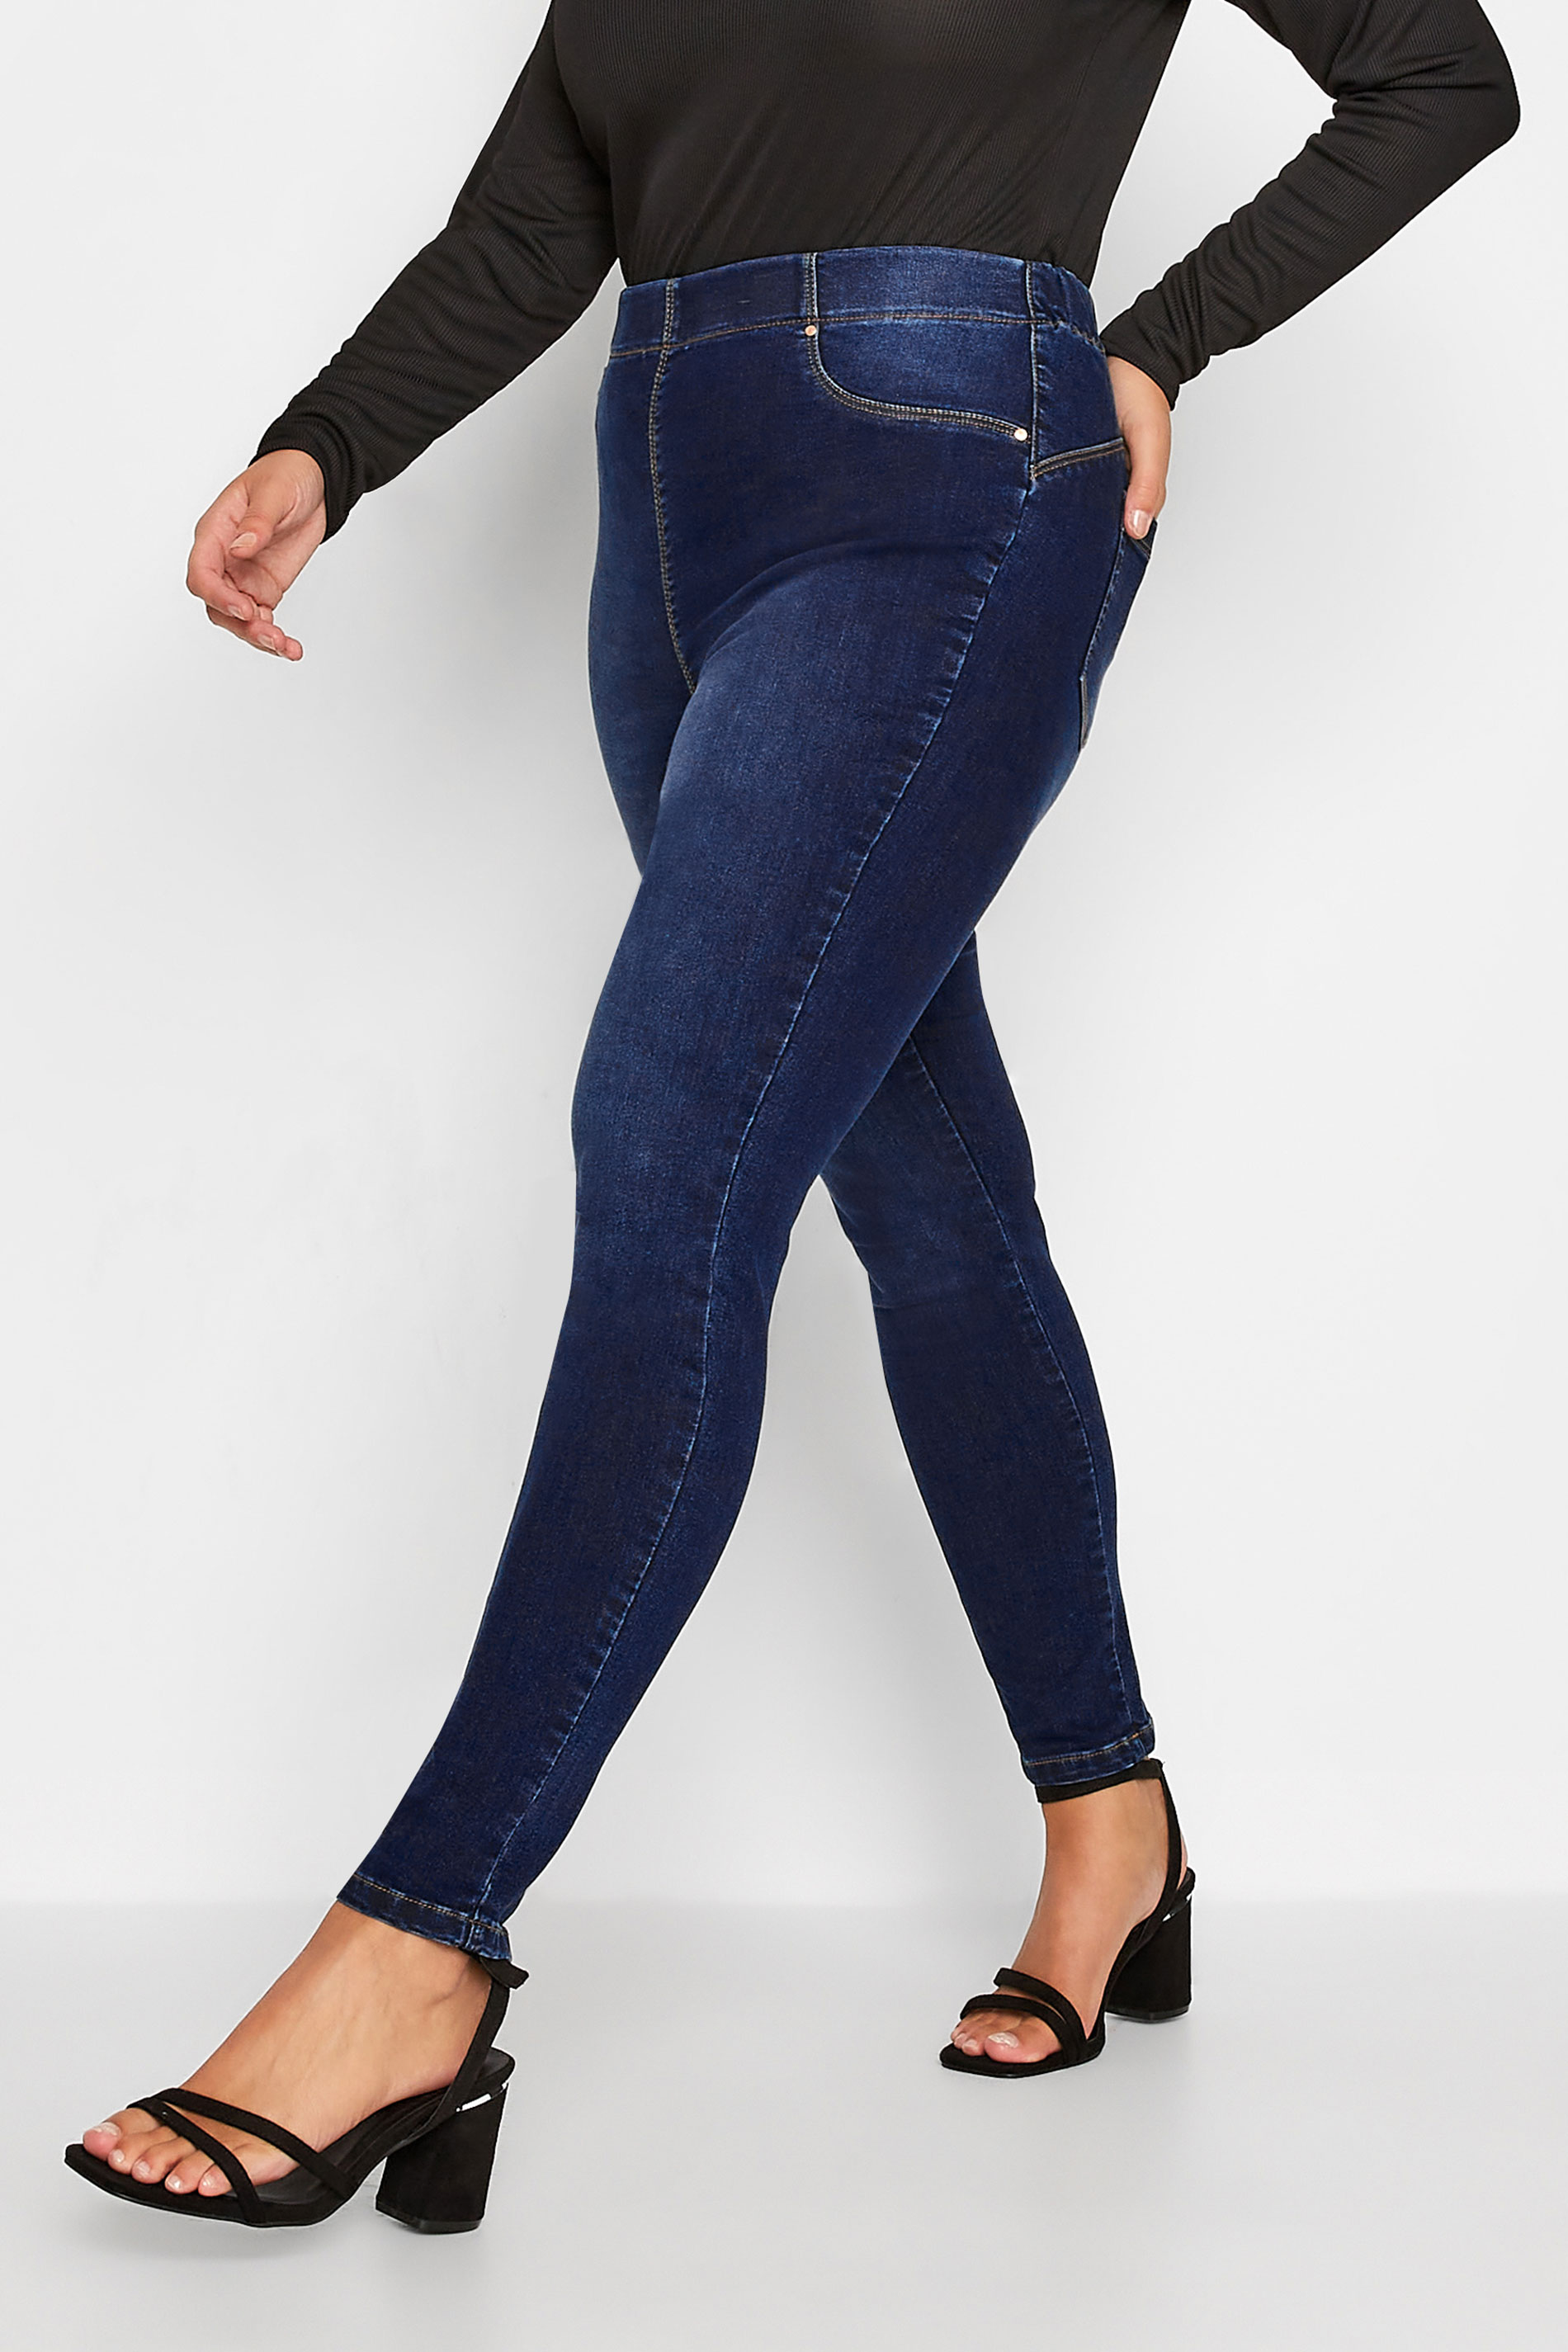 discount 68% Zara Jeggings & Skinny & Slim WOMEN FASHION Jeans Basic Black 40                  EU 